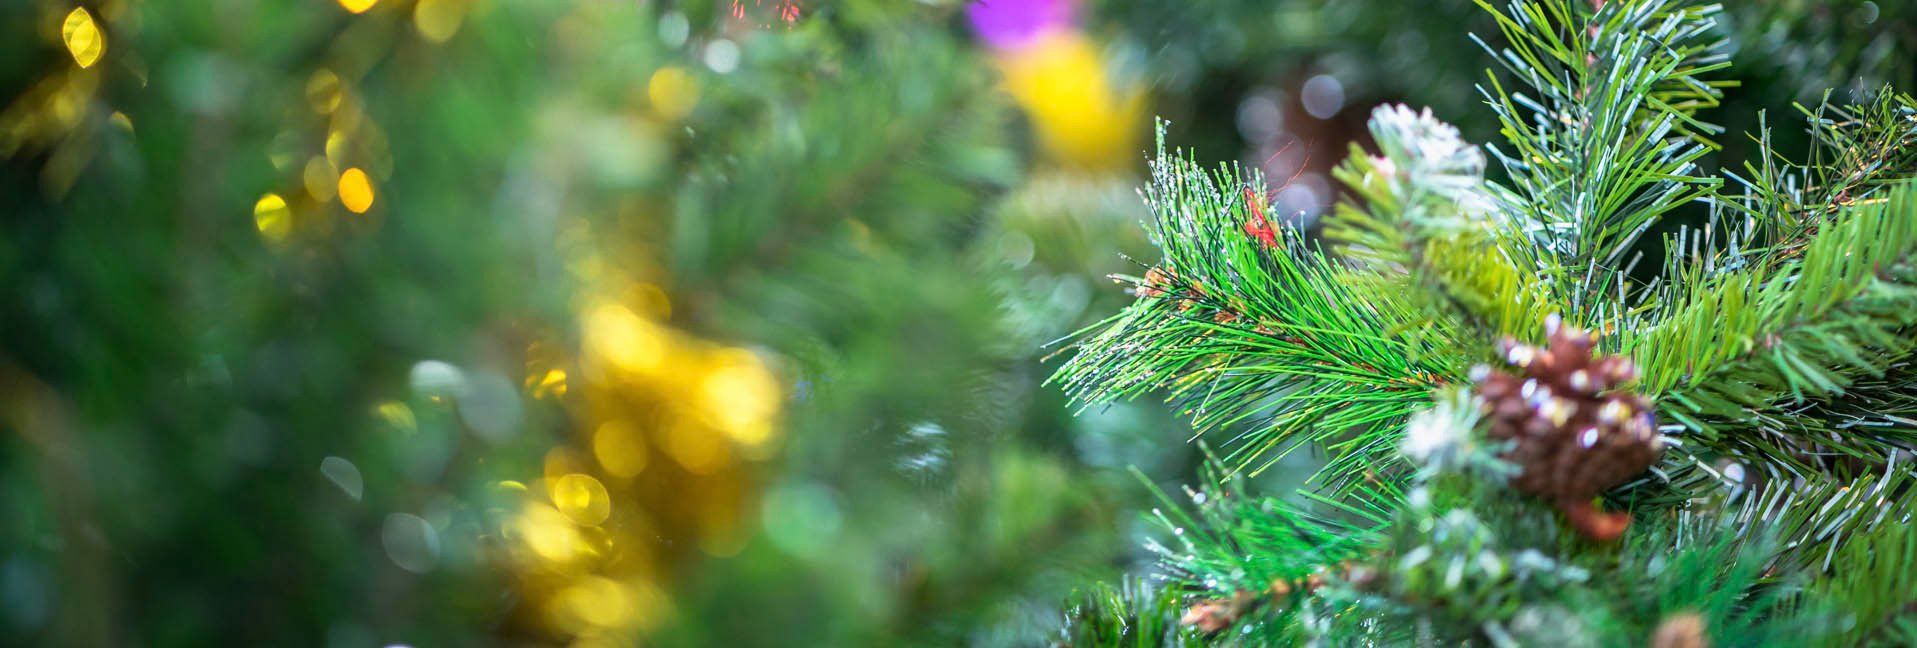 How to Keep Your Christmas Tree Fresh